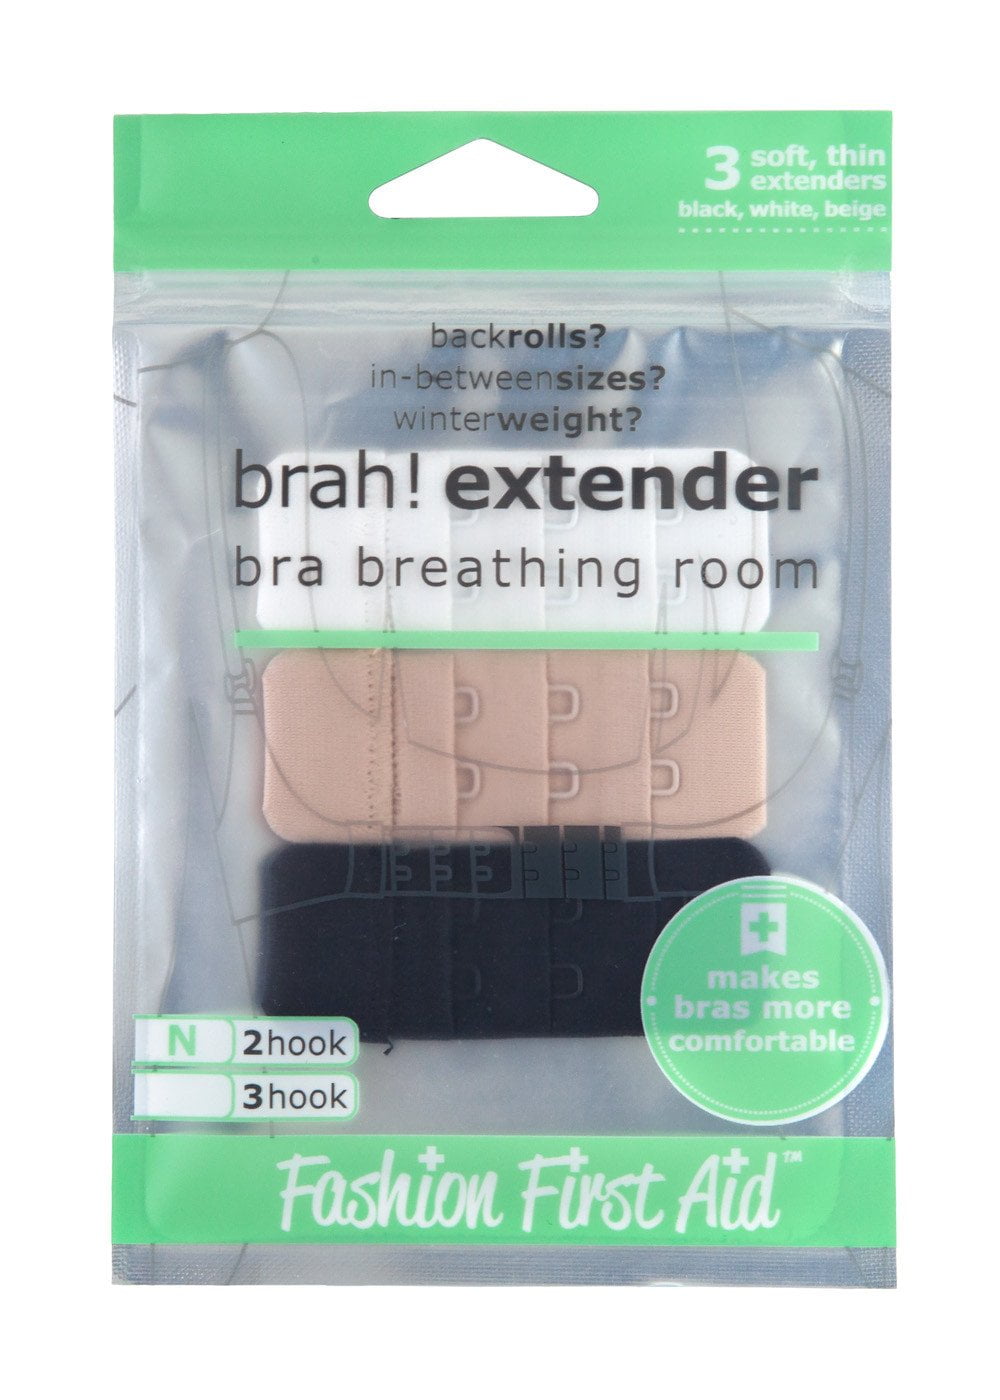 Brah! Extender: 2 hook Narrow Bra Band Extension, 3 Pack (White, Beige,  Black)